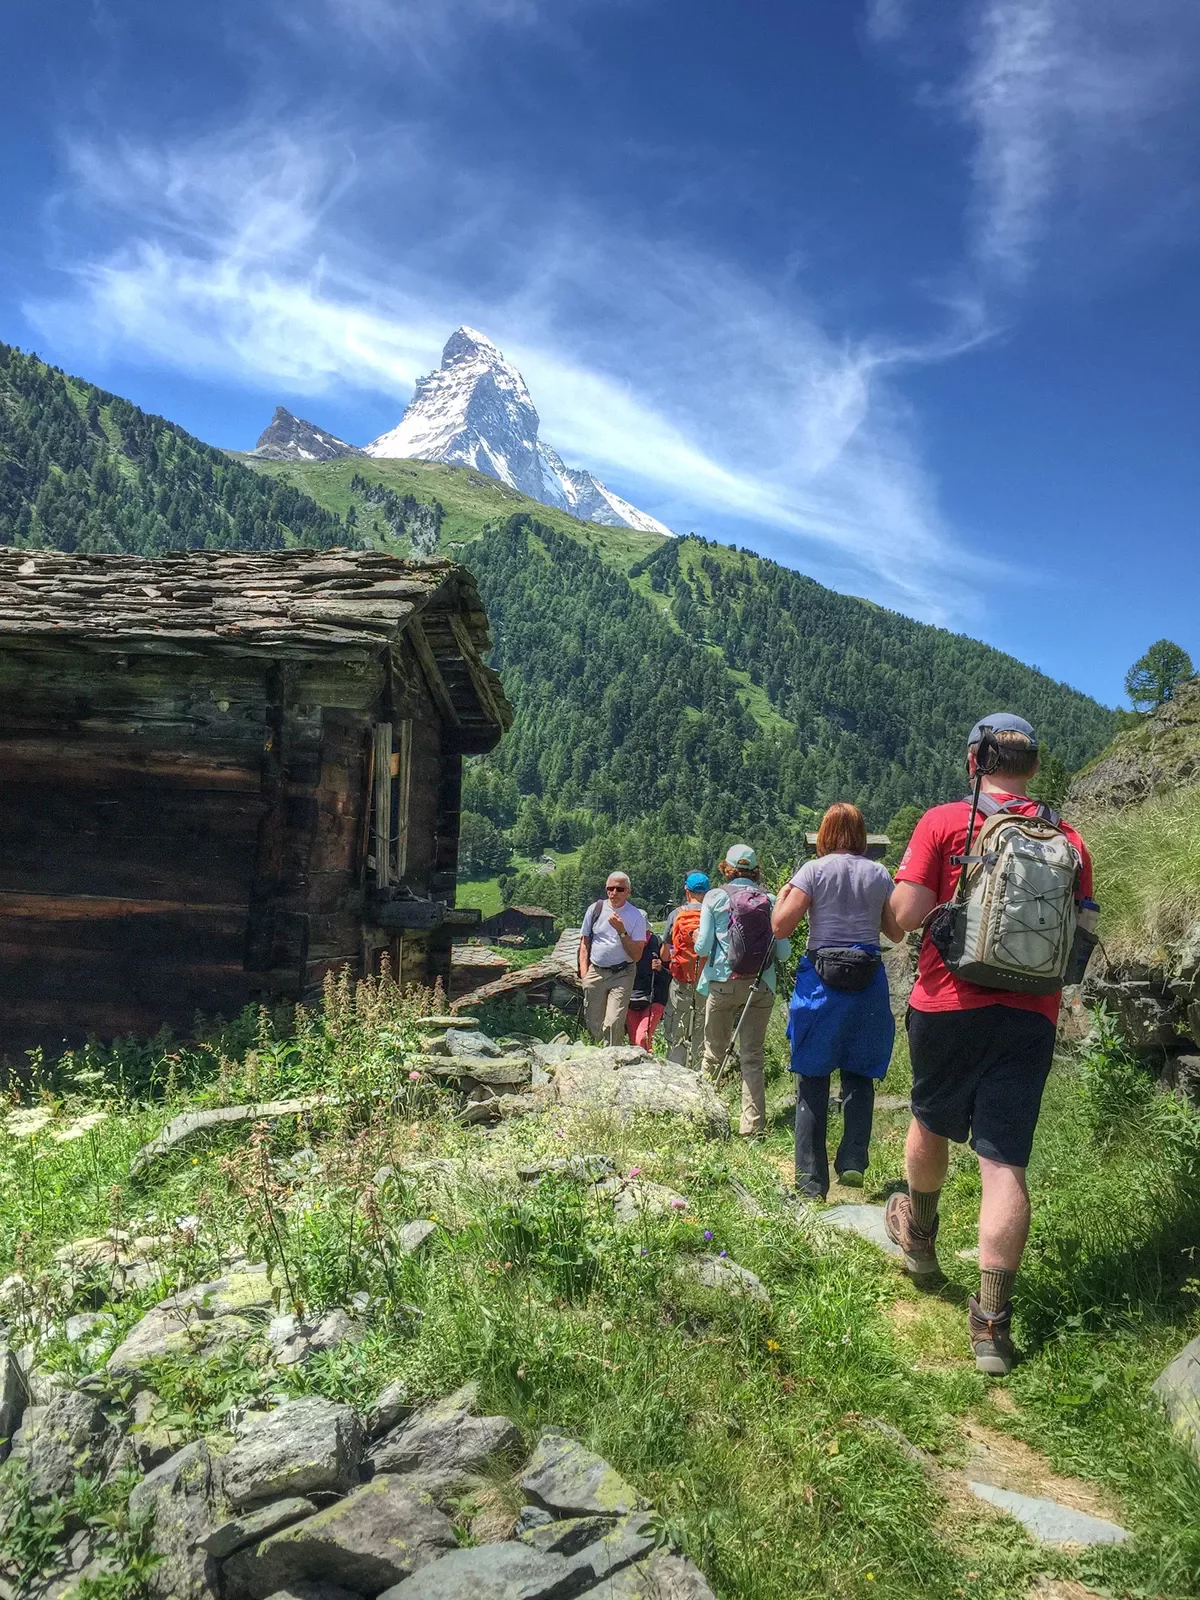 Group of guests walking past wooden shack, Matterhorn in distance.